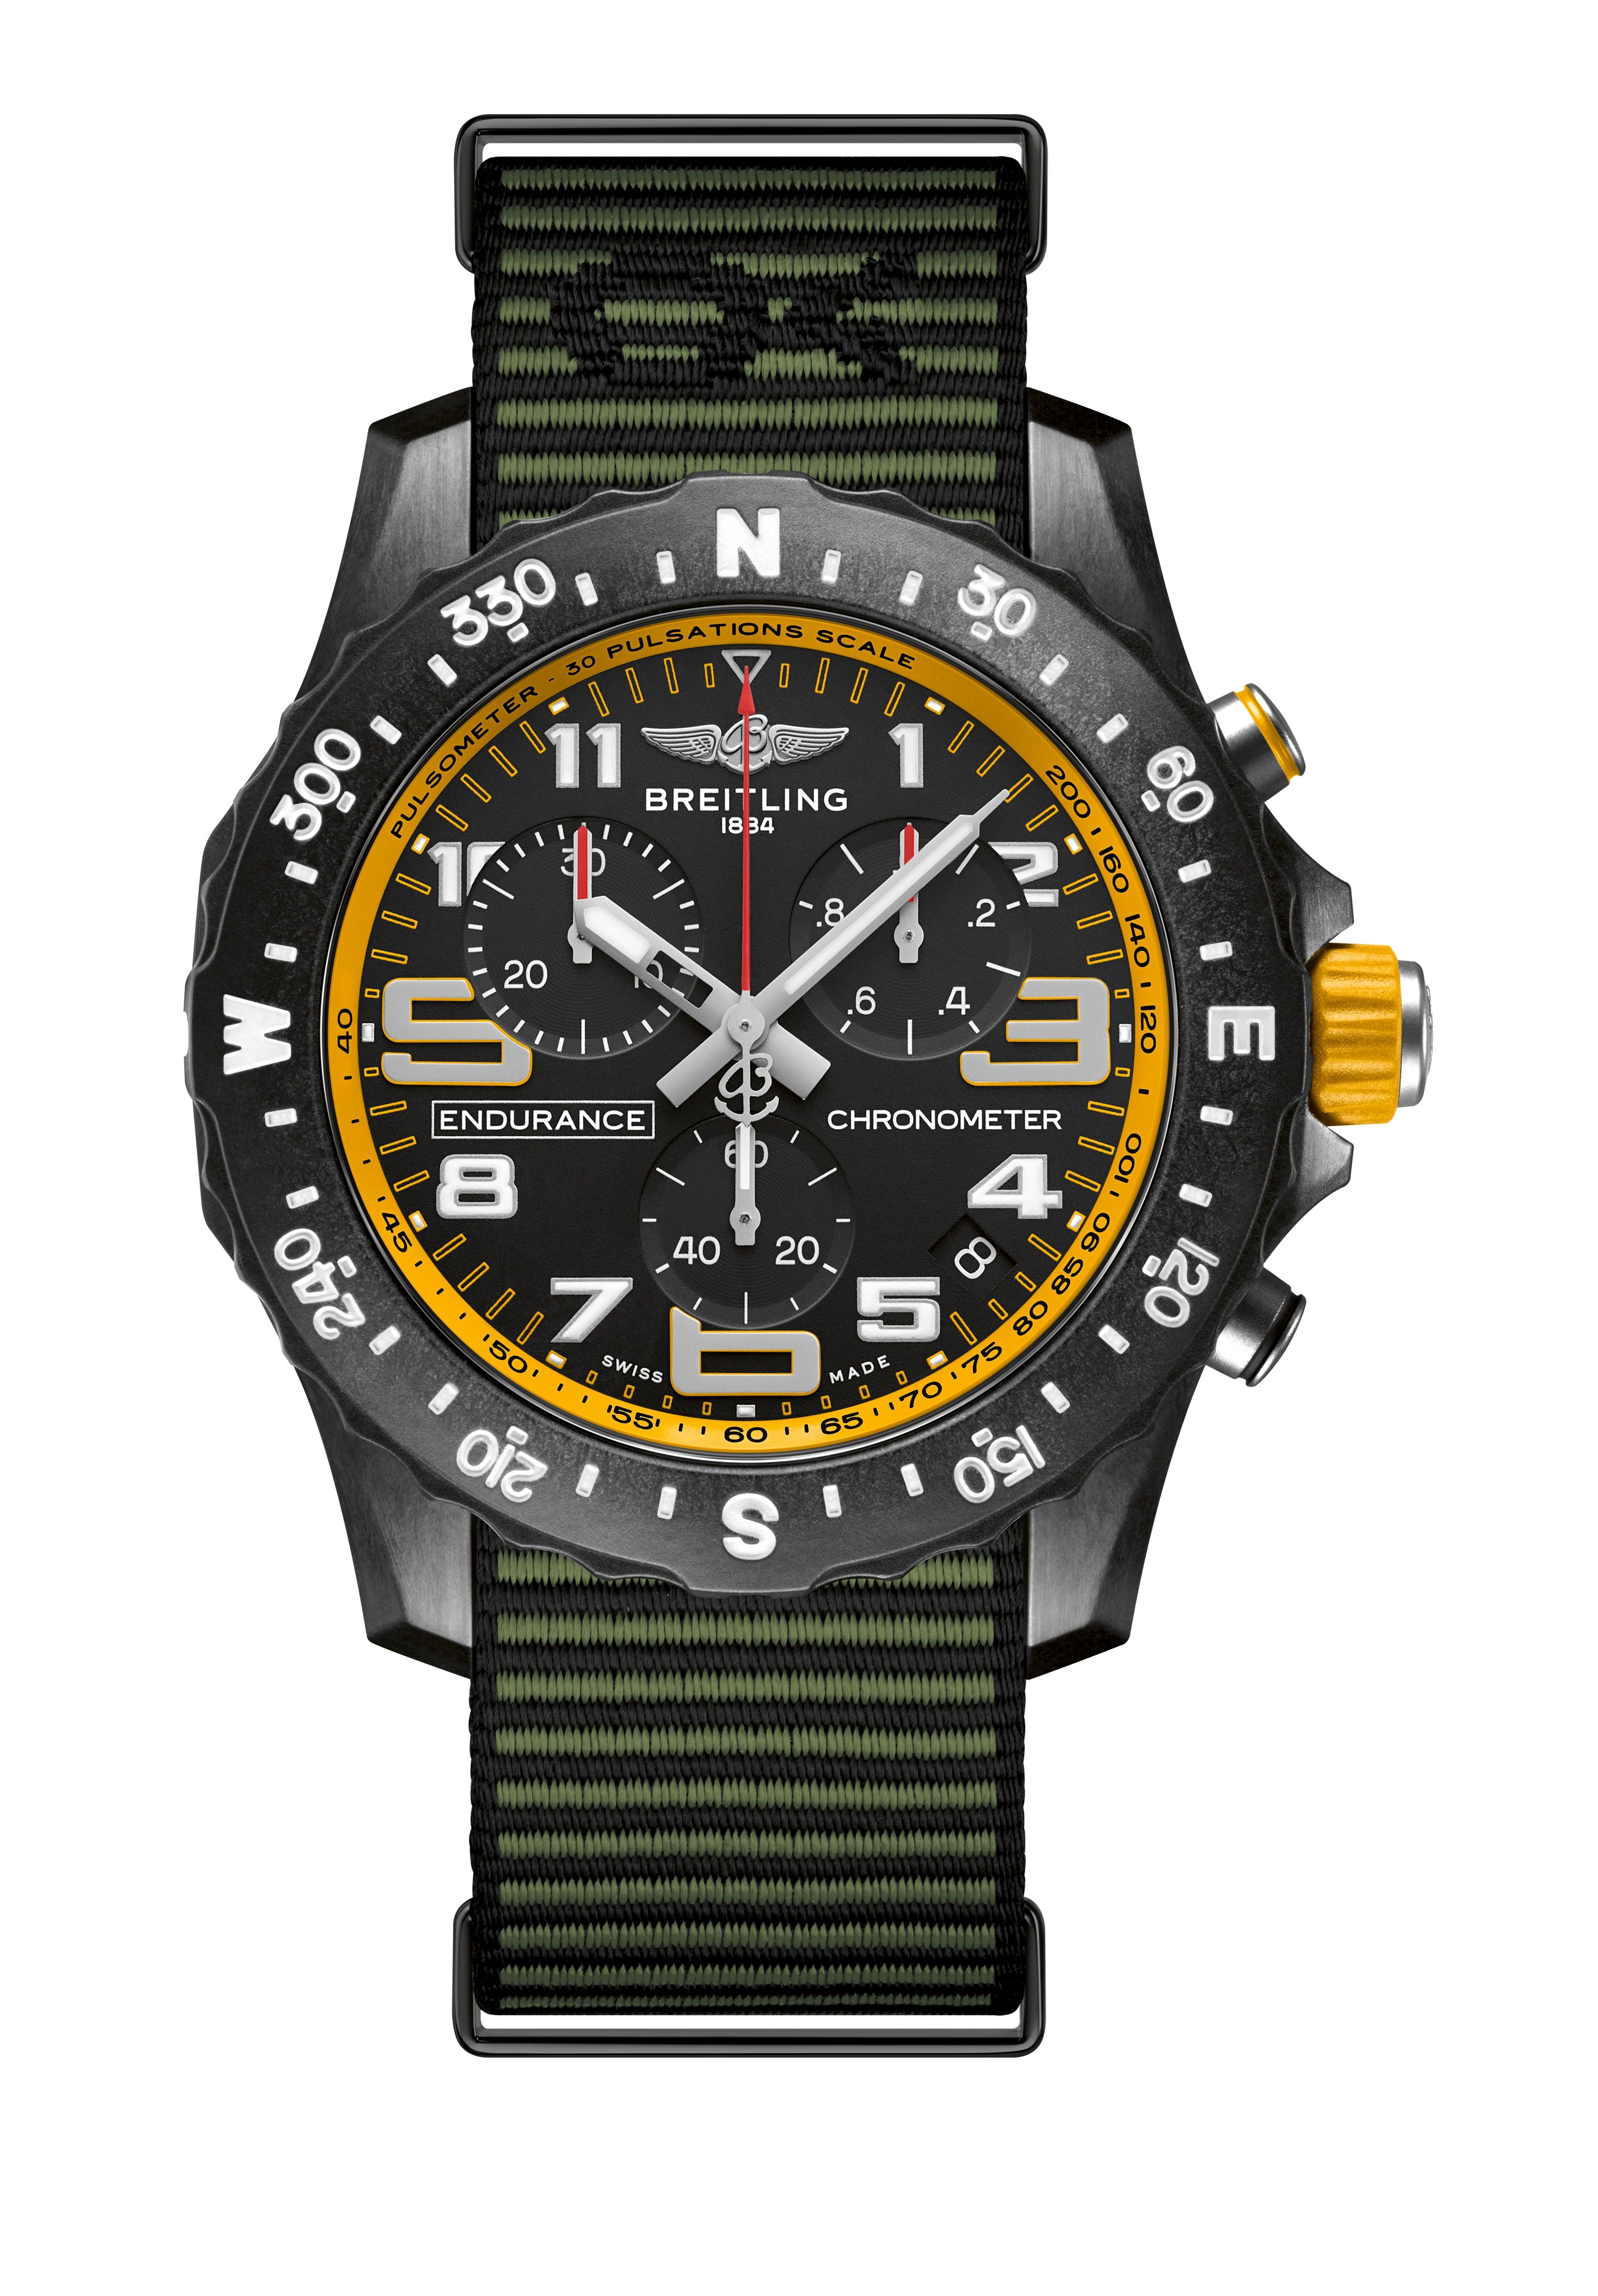 Reloj Endurance Pro de Breitling